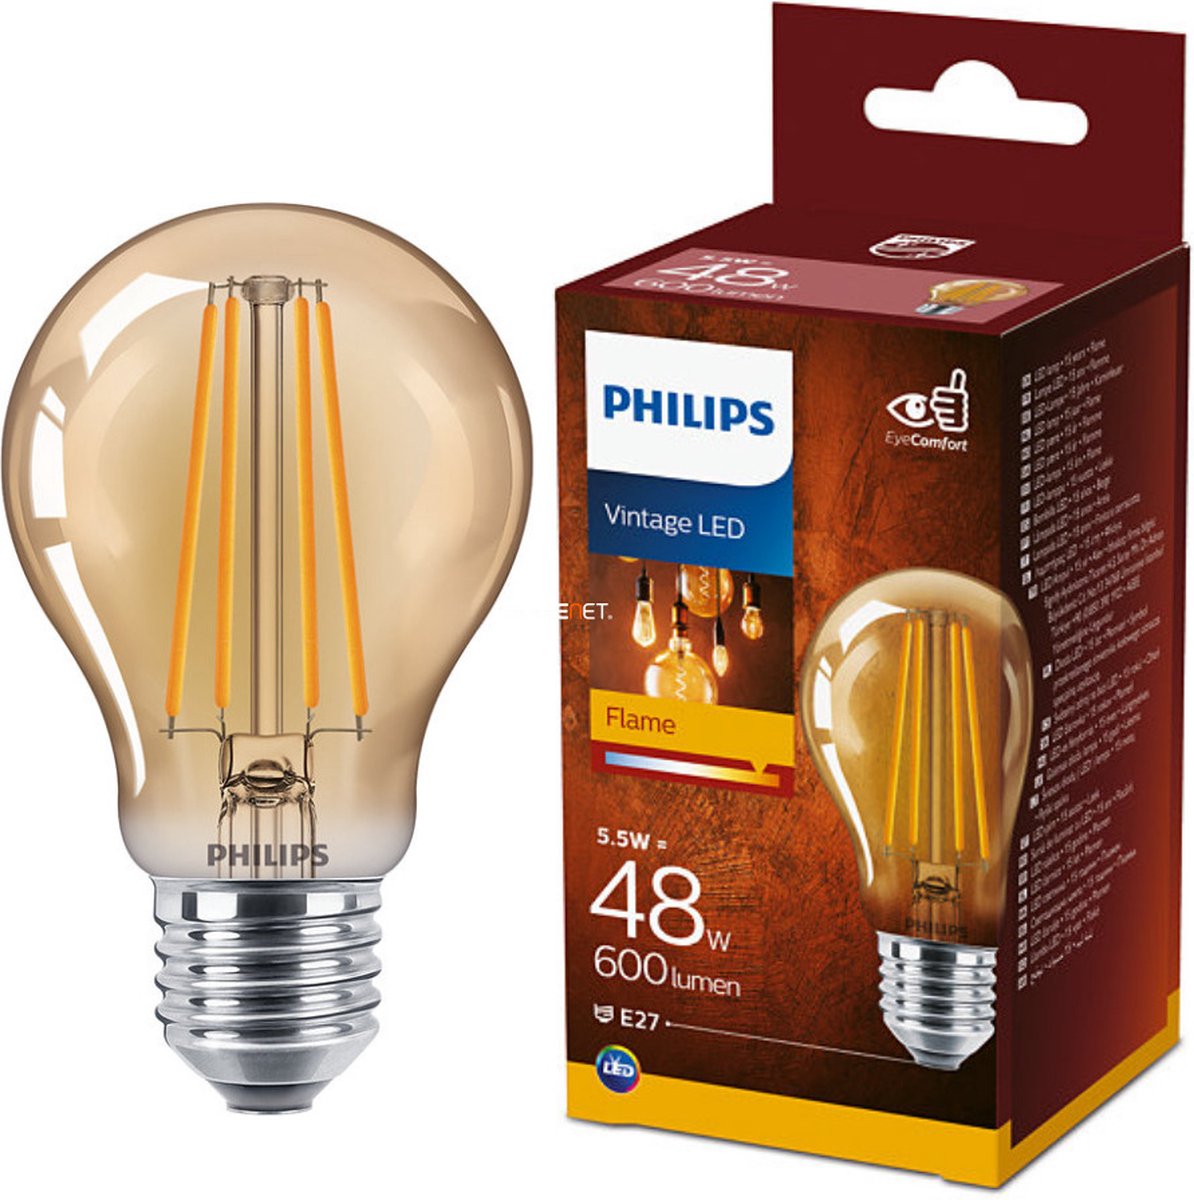 Philips LED Flame 5.5W (48W) - Warm Wit Licht - Niet Dimbaar |